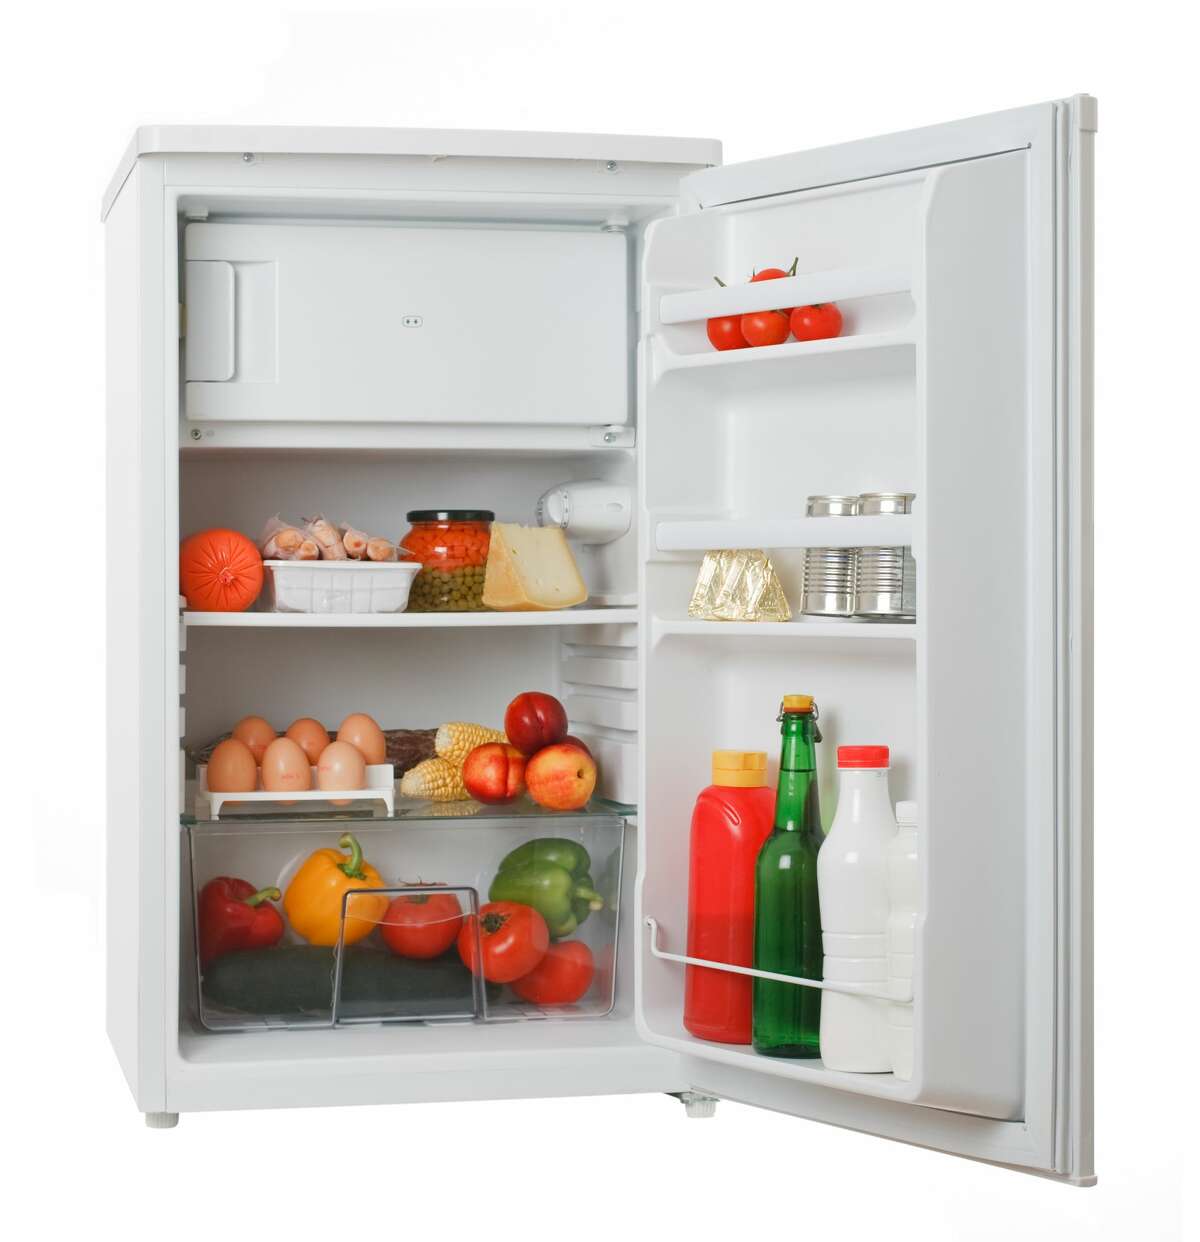 1.7 cubic foot refrigerator: $59 (was $79.84)